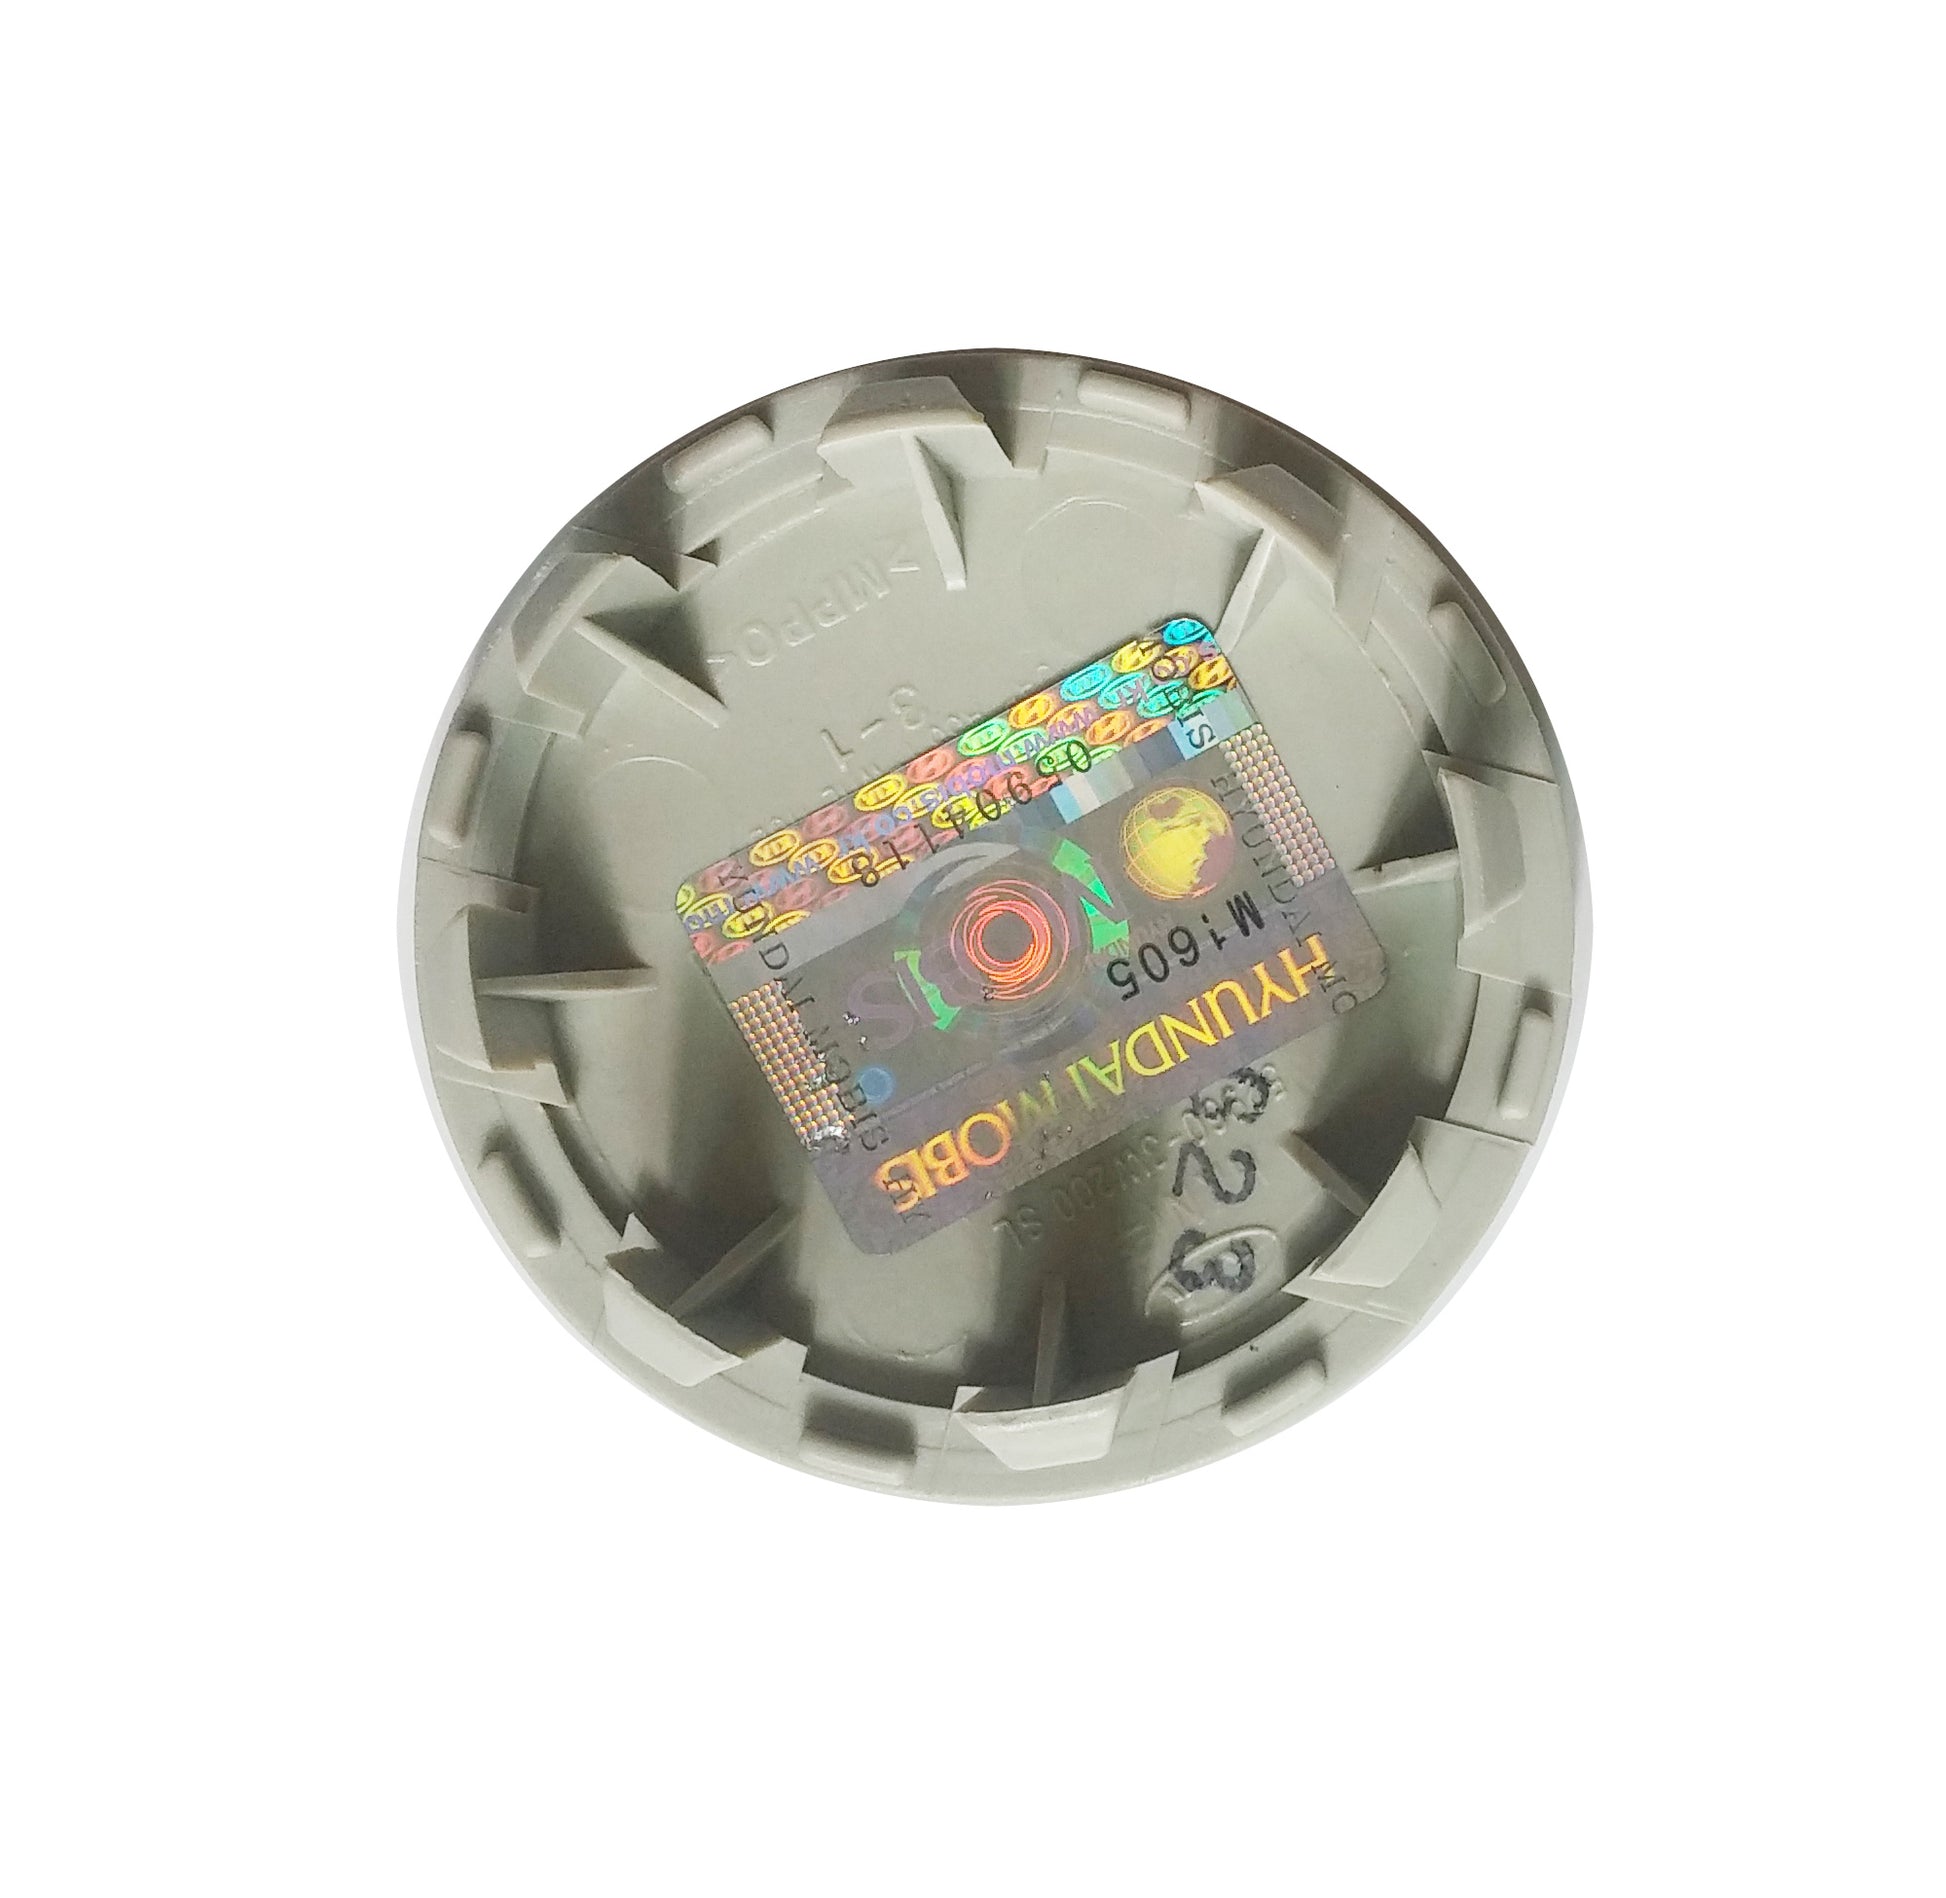 4pcs new Wheel Center hub Caps for KIA Telluride forte K5 Niro Sorento EV6, 52960-R0100